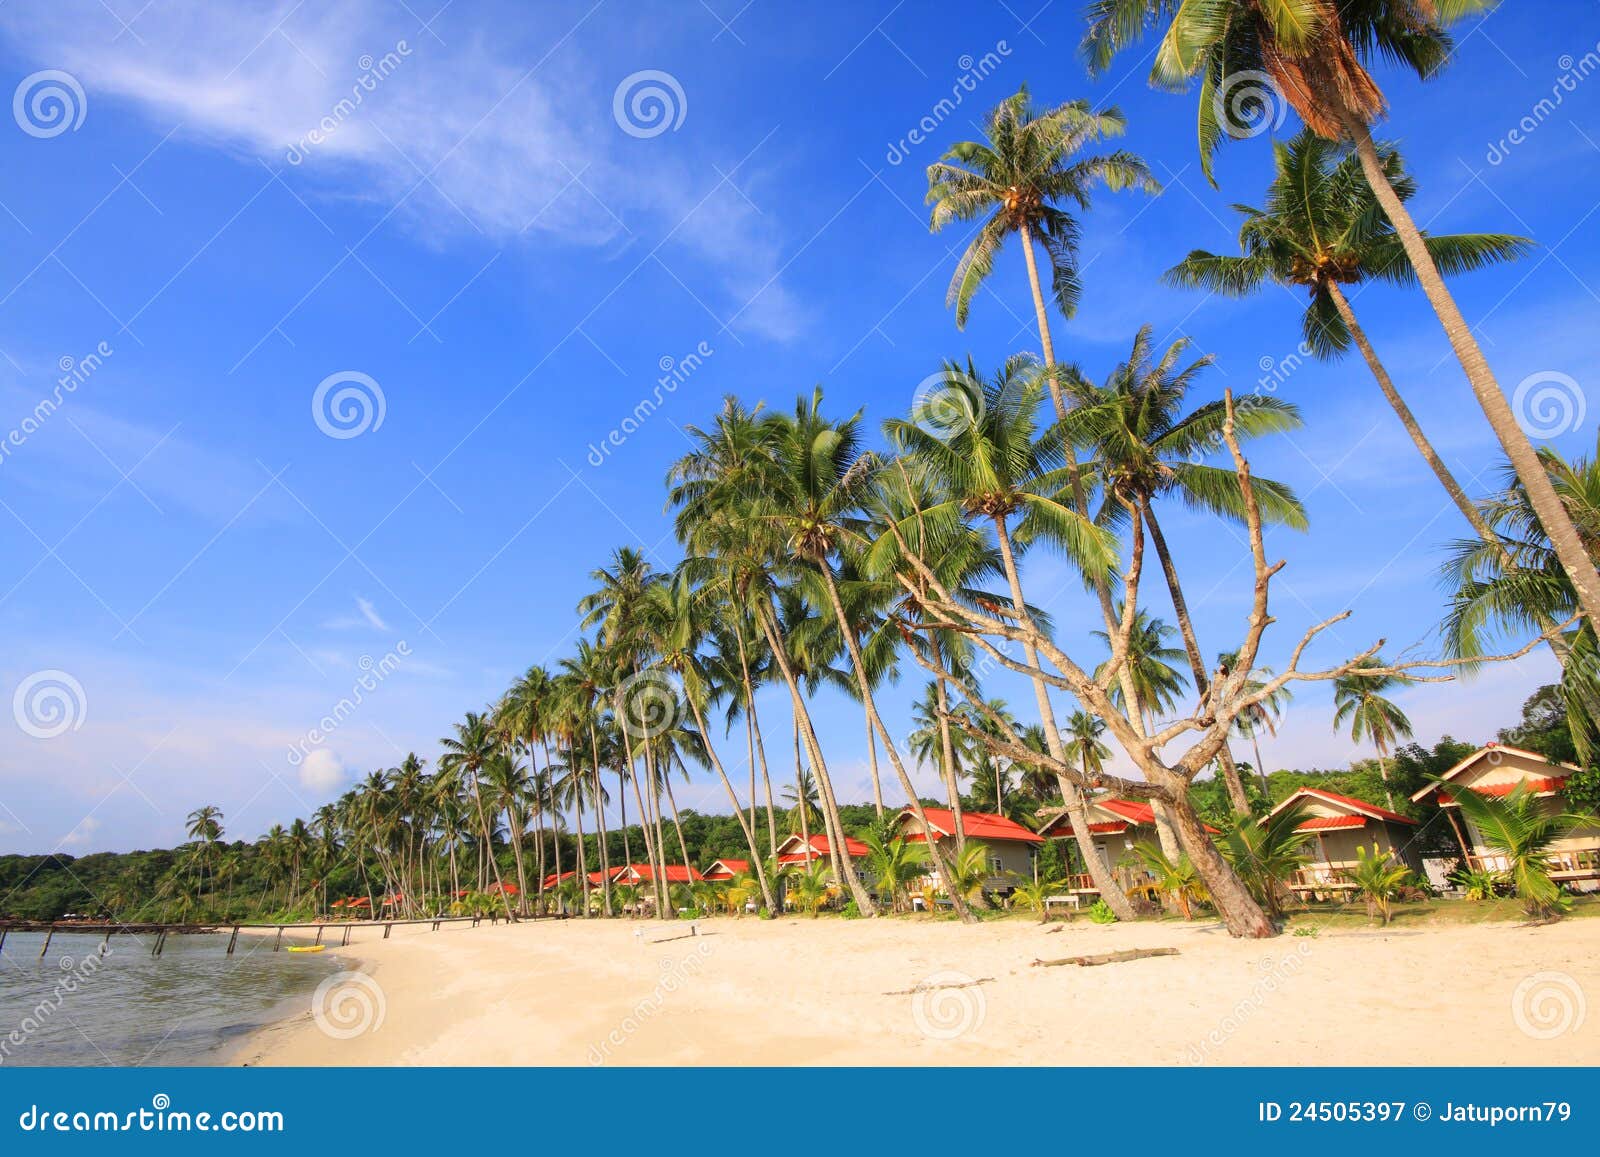 Coconut on the beach stock image. Image of beauty, coastline - 24505397